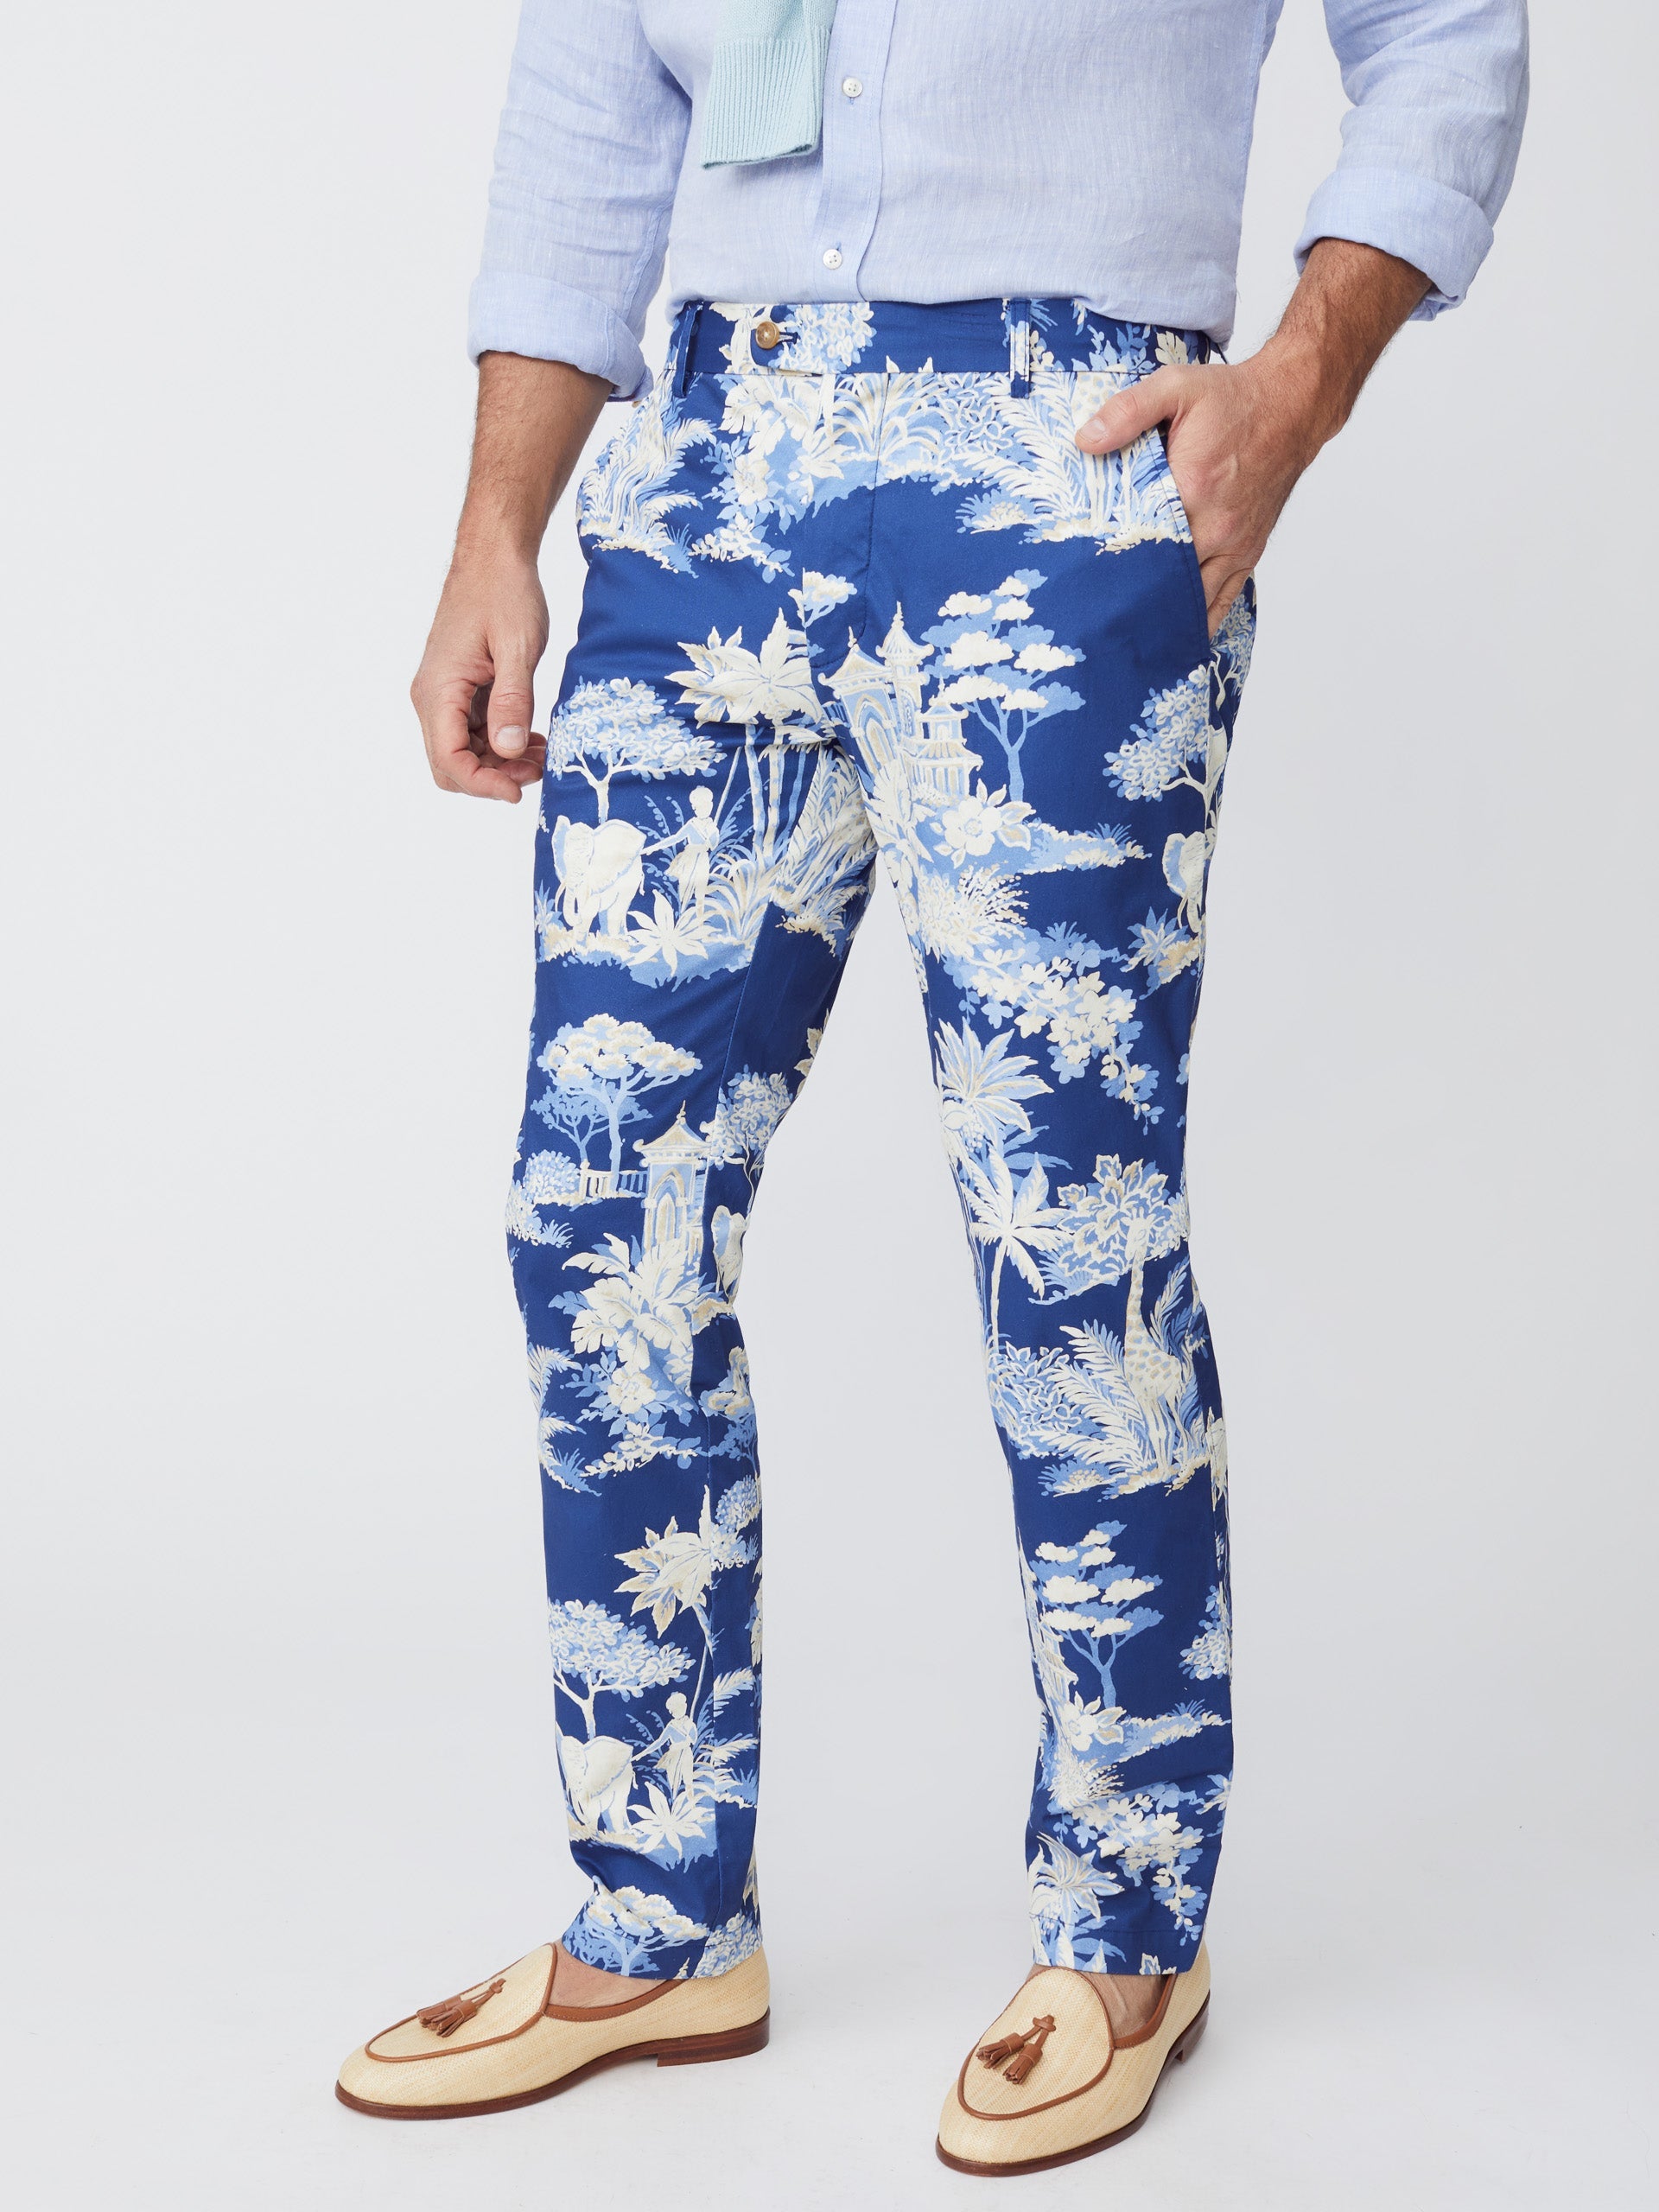 XFLWAM Men's Floral Print Drawstring Elastic Waist Pants with Pockets  Workout Jogger Active Sweatpants Khaki S - Walmart.com